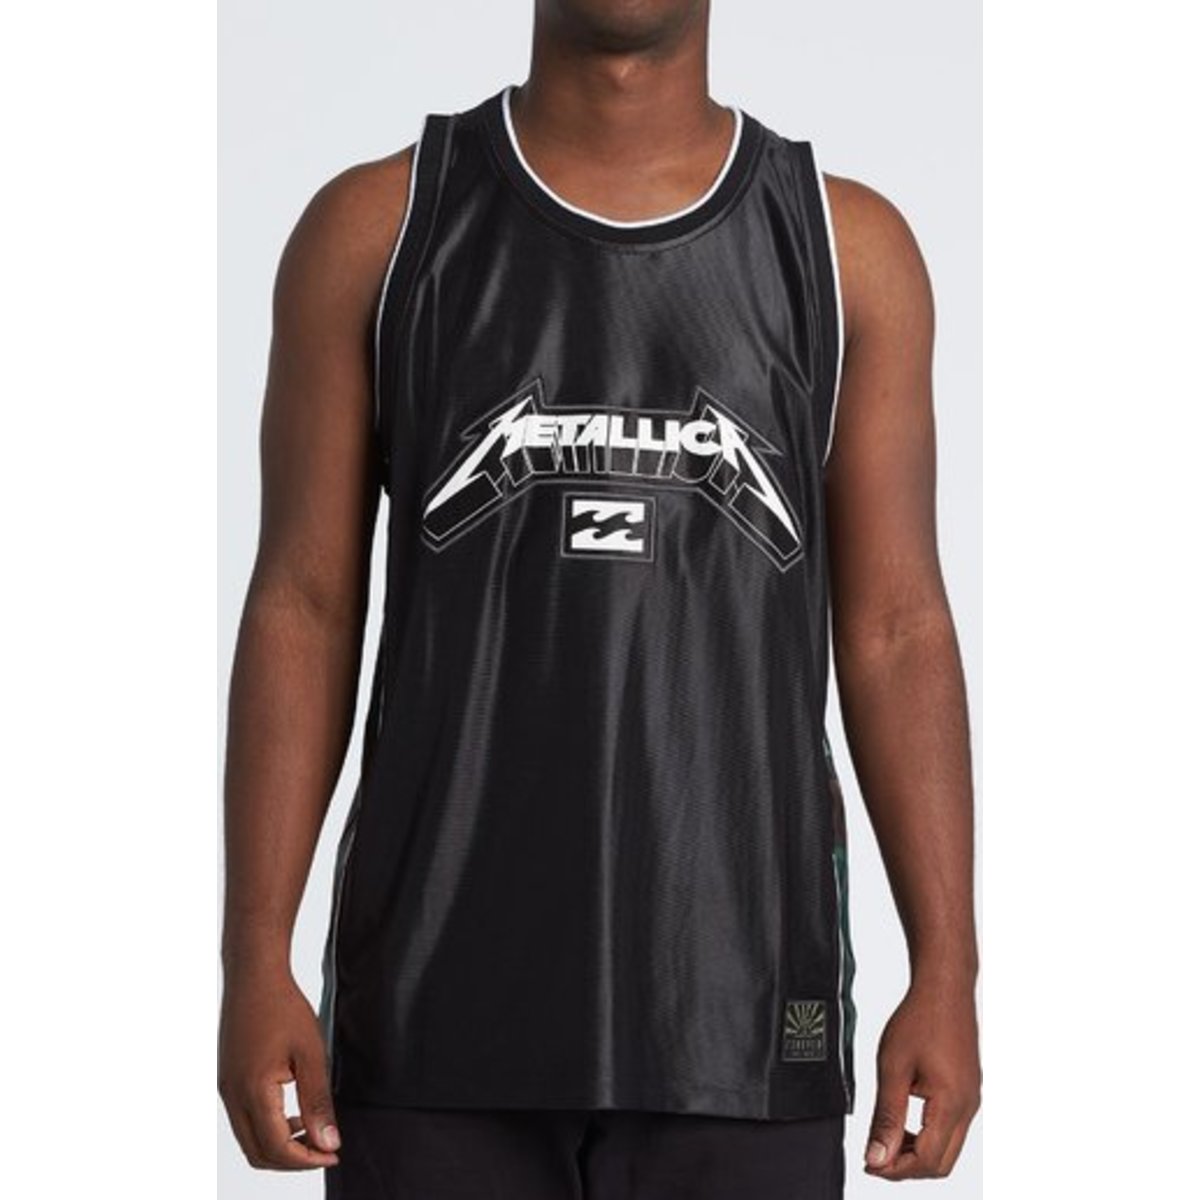 Metallica - Snake Basketball Jersey - Size Small